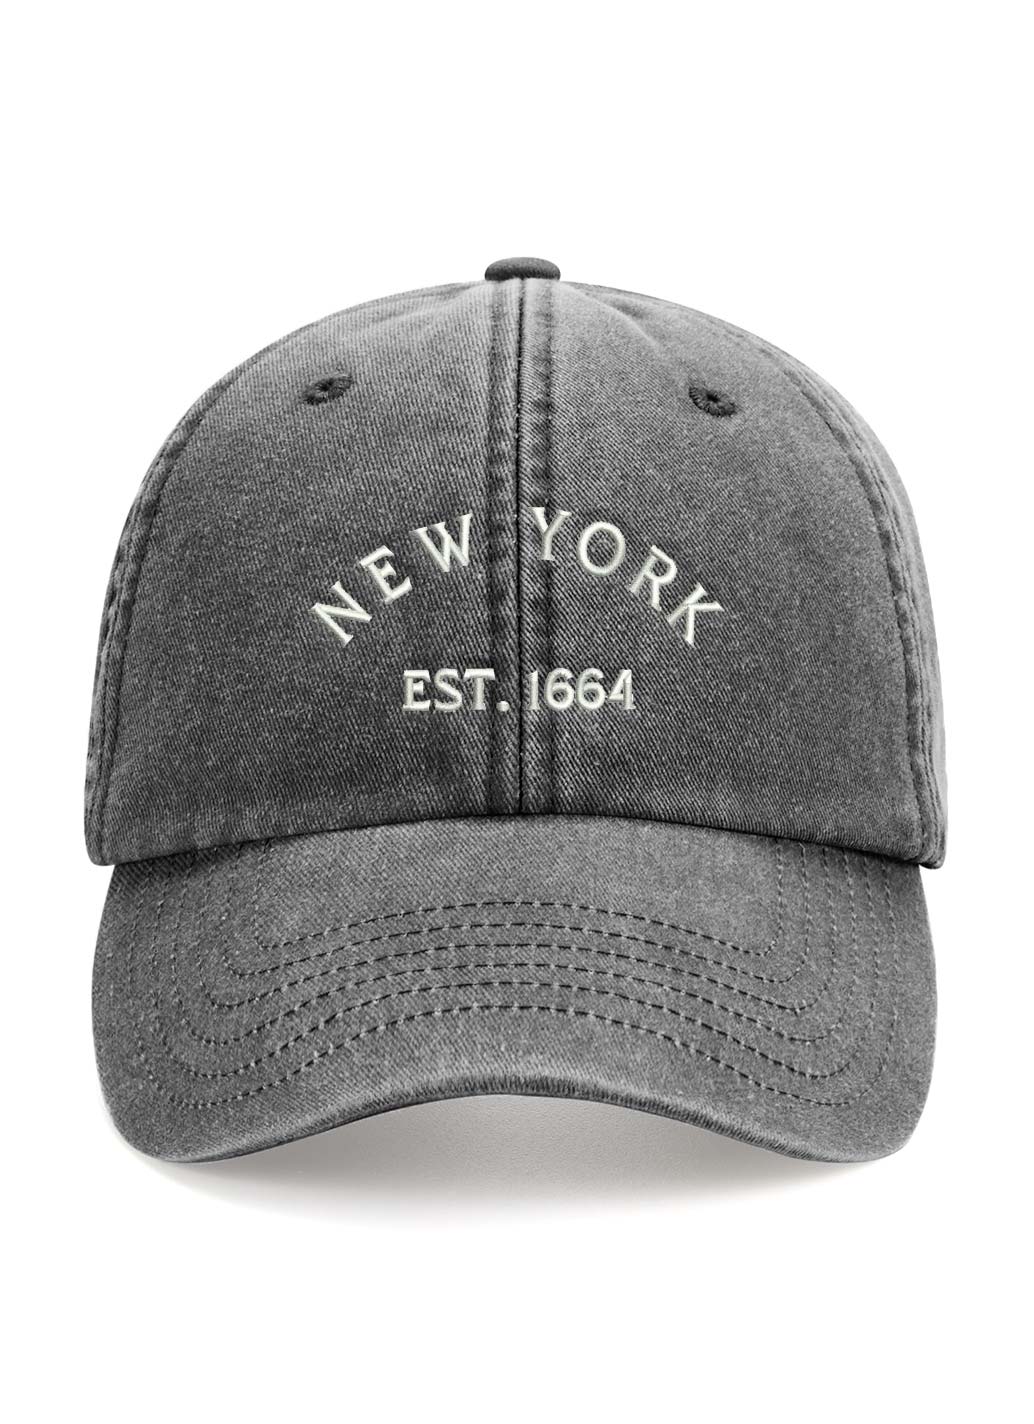 'NEW' Vintage New York Cap - Washed black